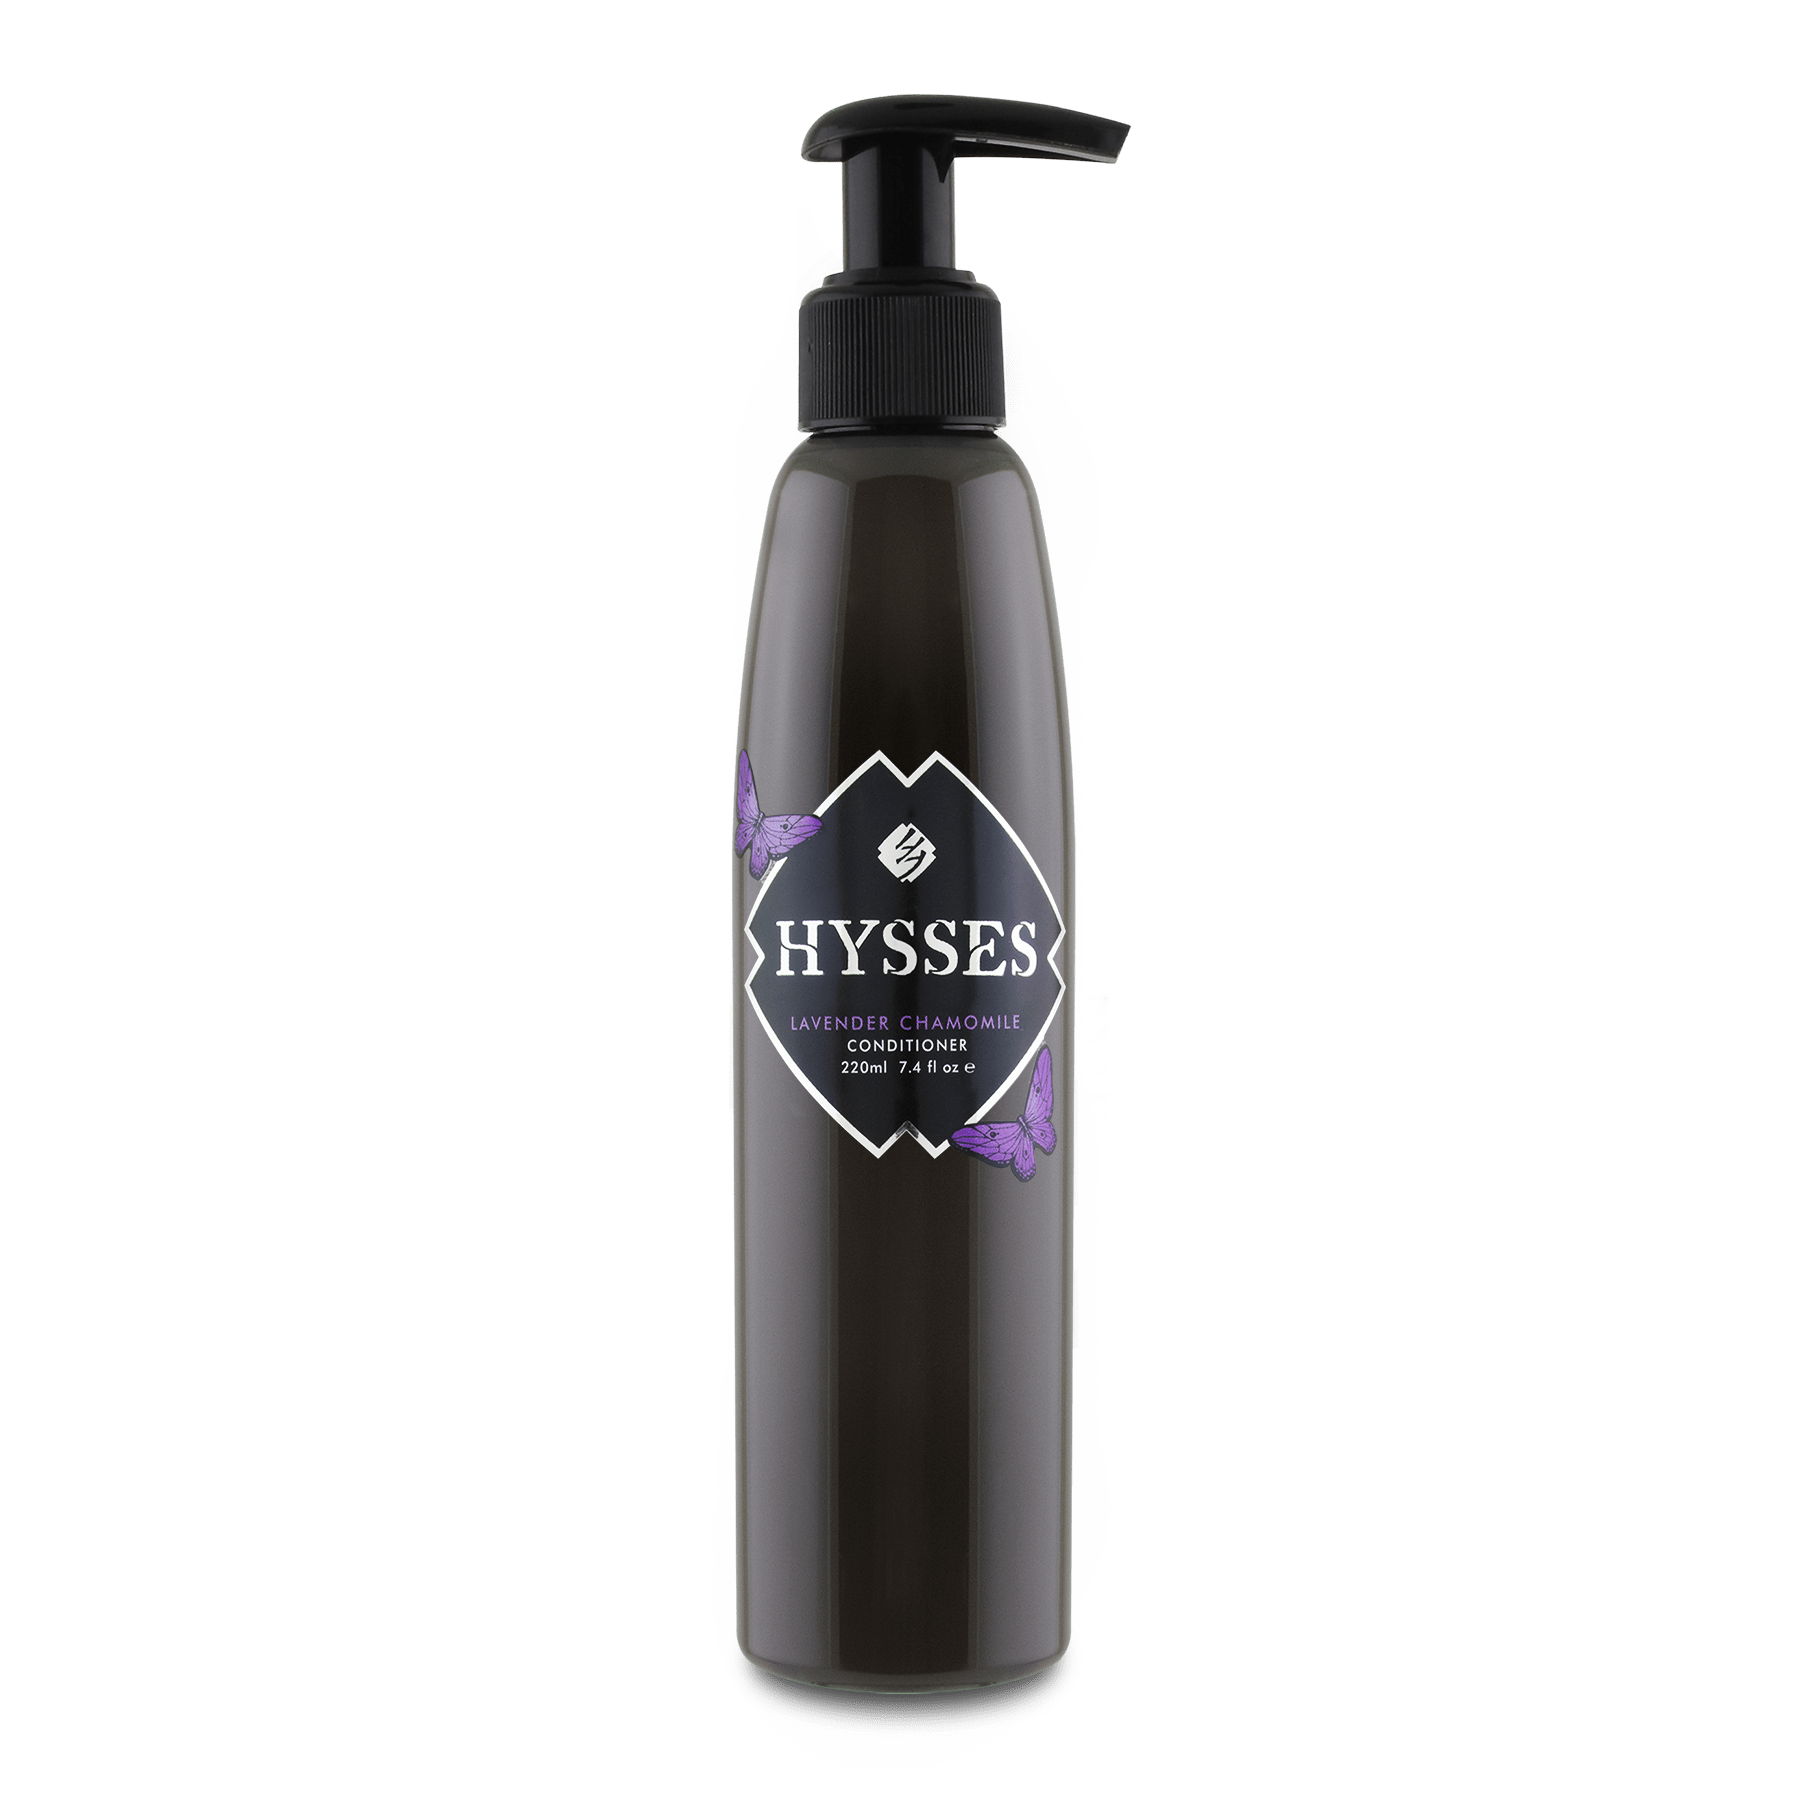 Hysses Hair Care Conditioner Lavender Chamomile, 220ml